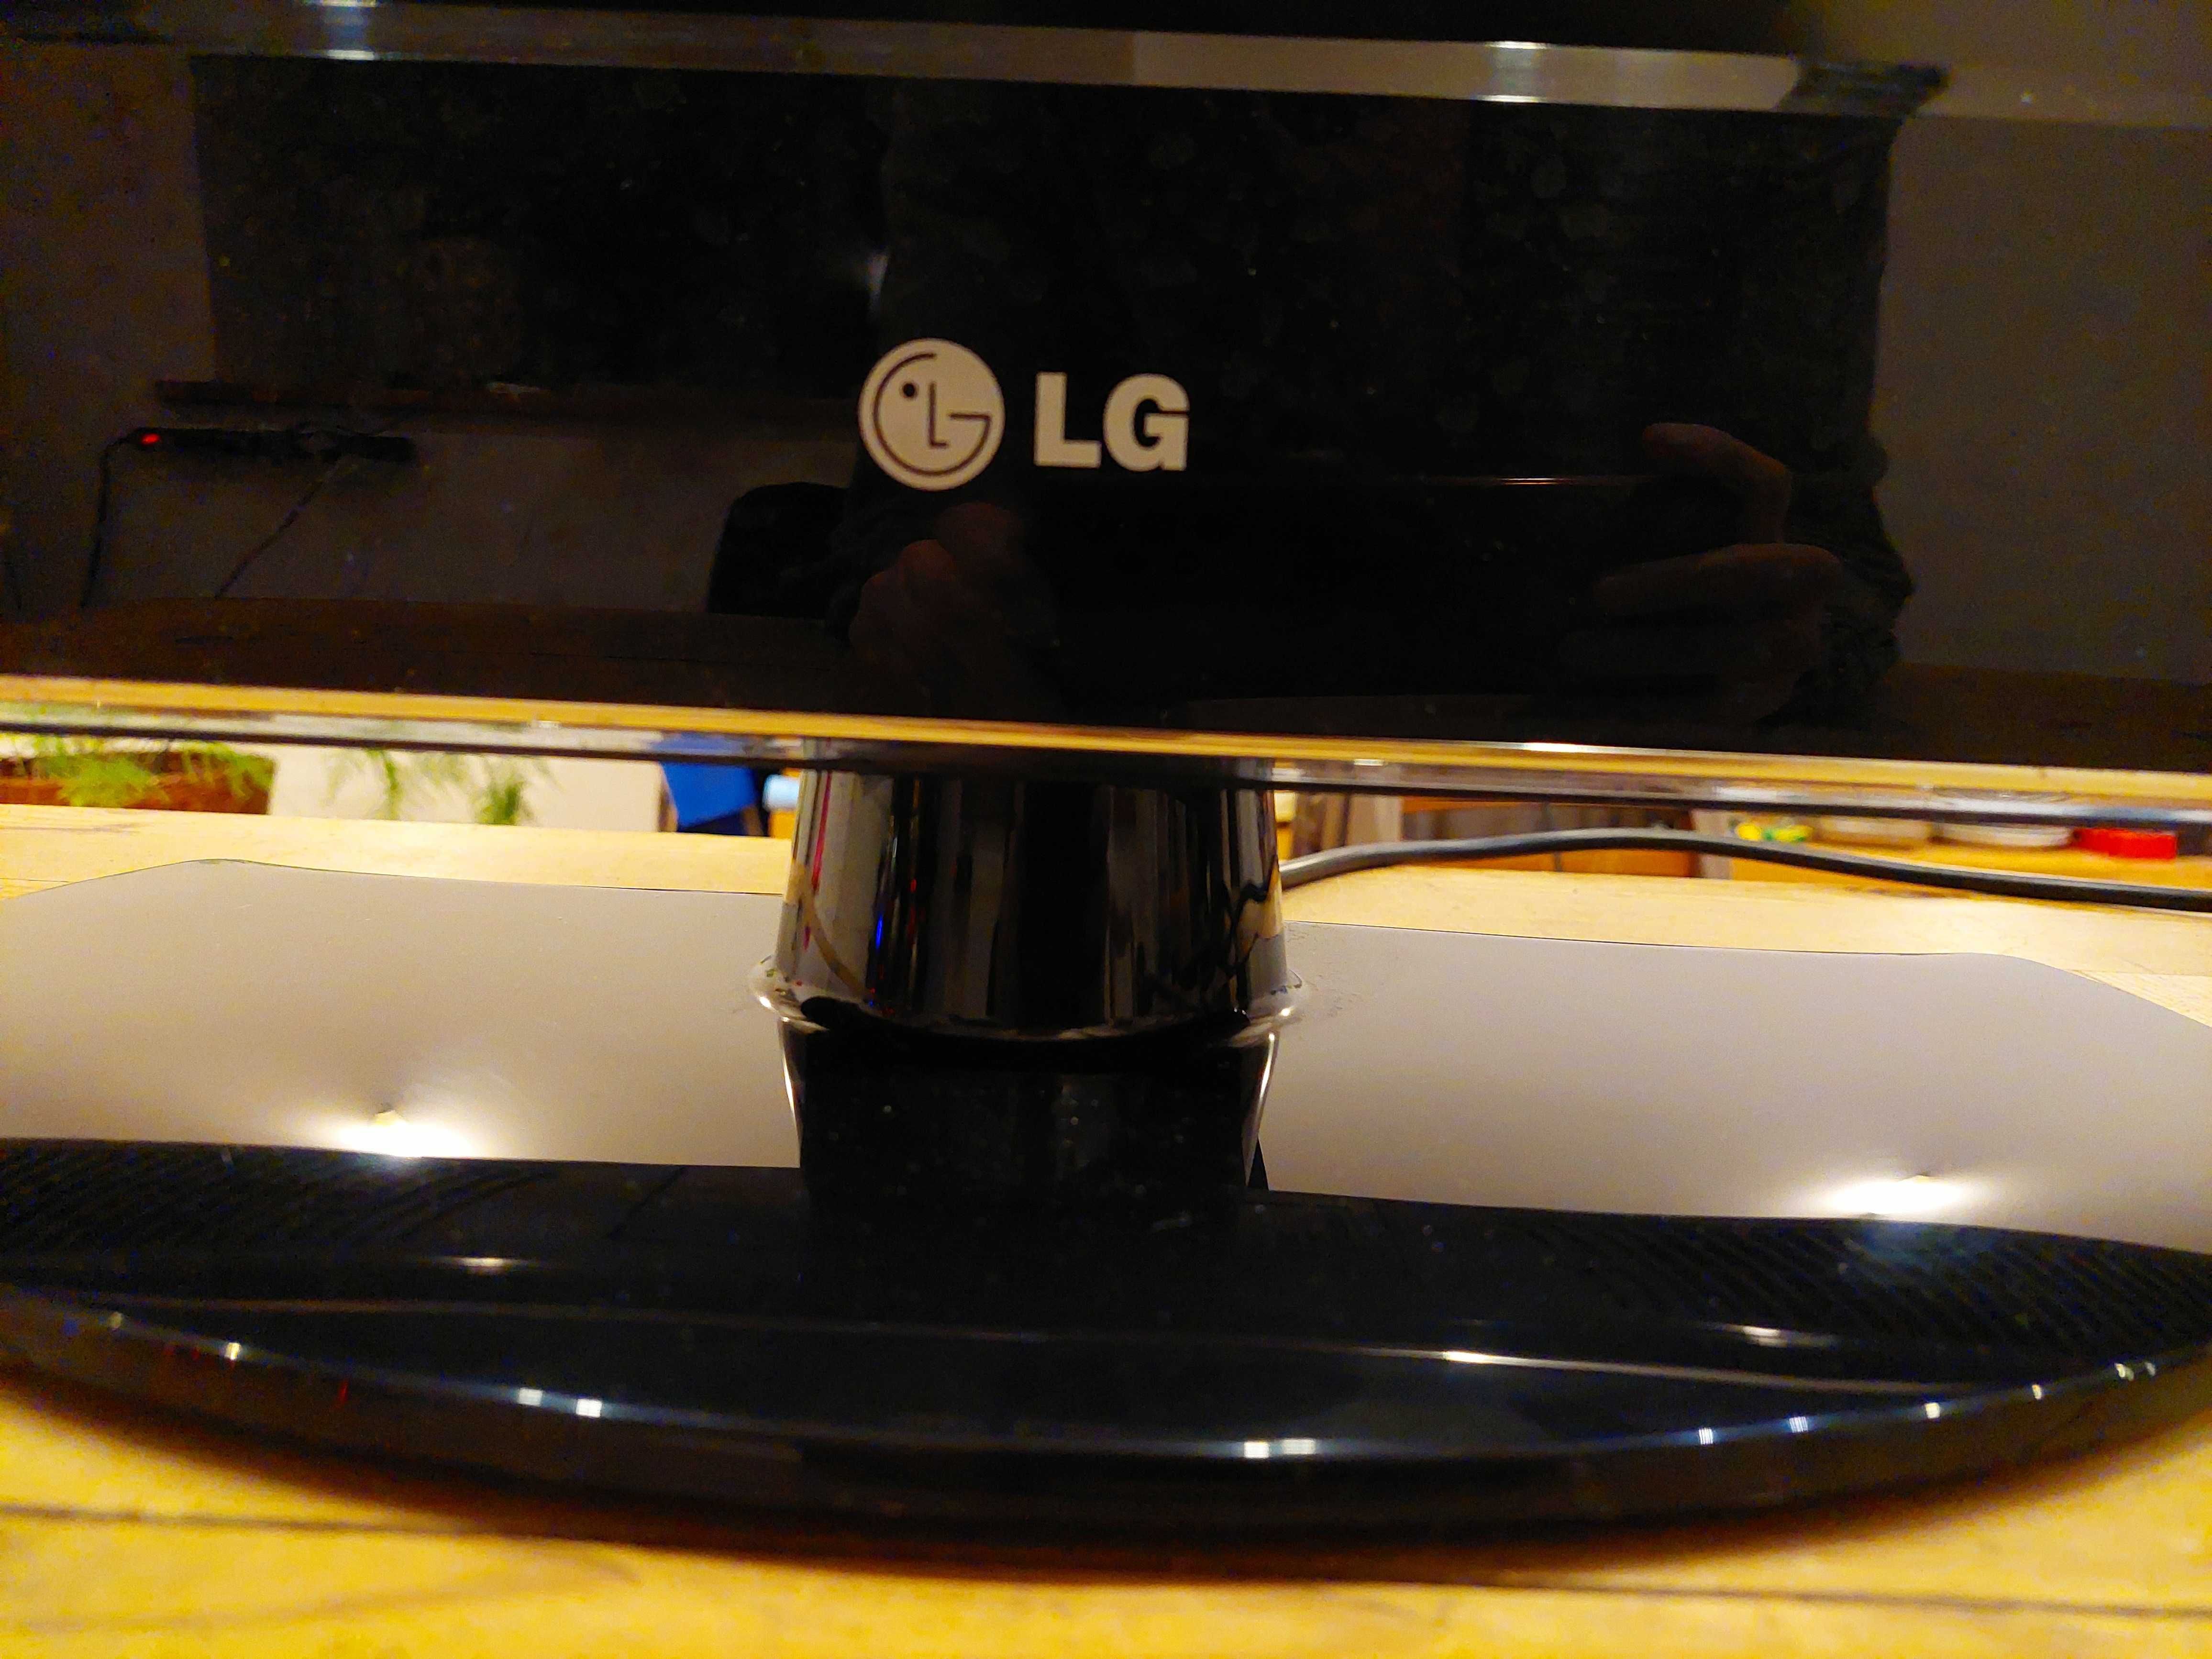 Telewizor LCD firmy LG model 32LH5000-ZB